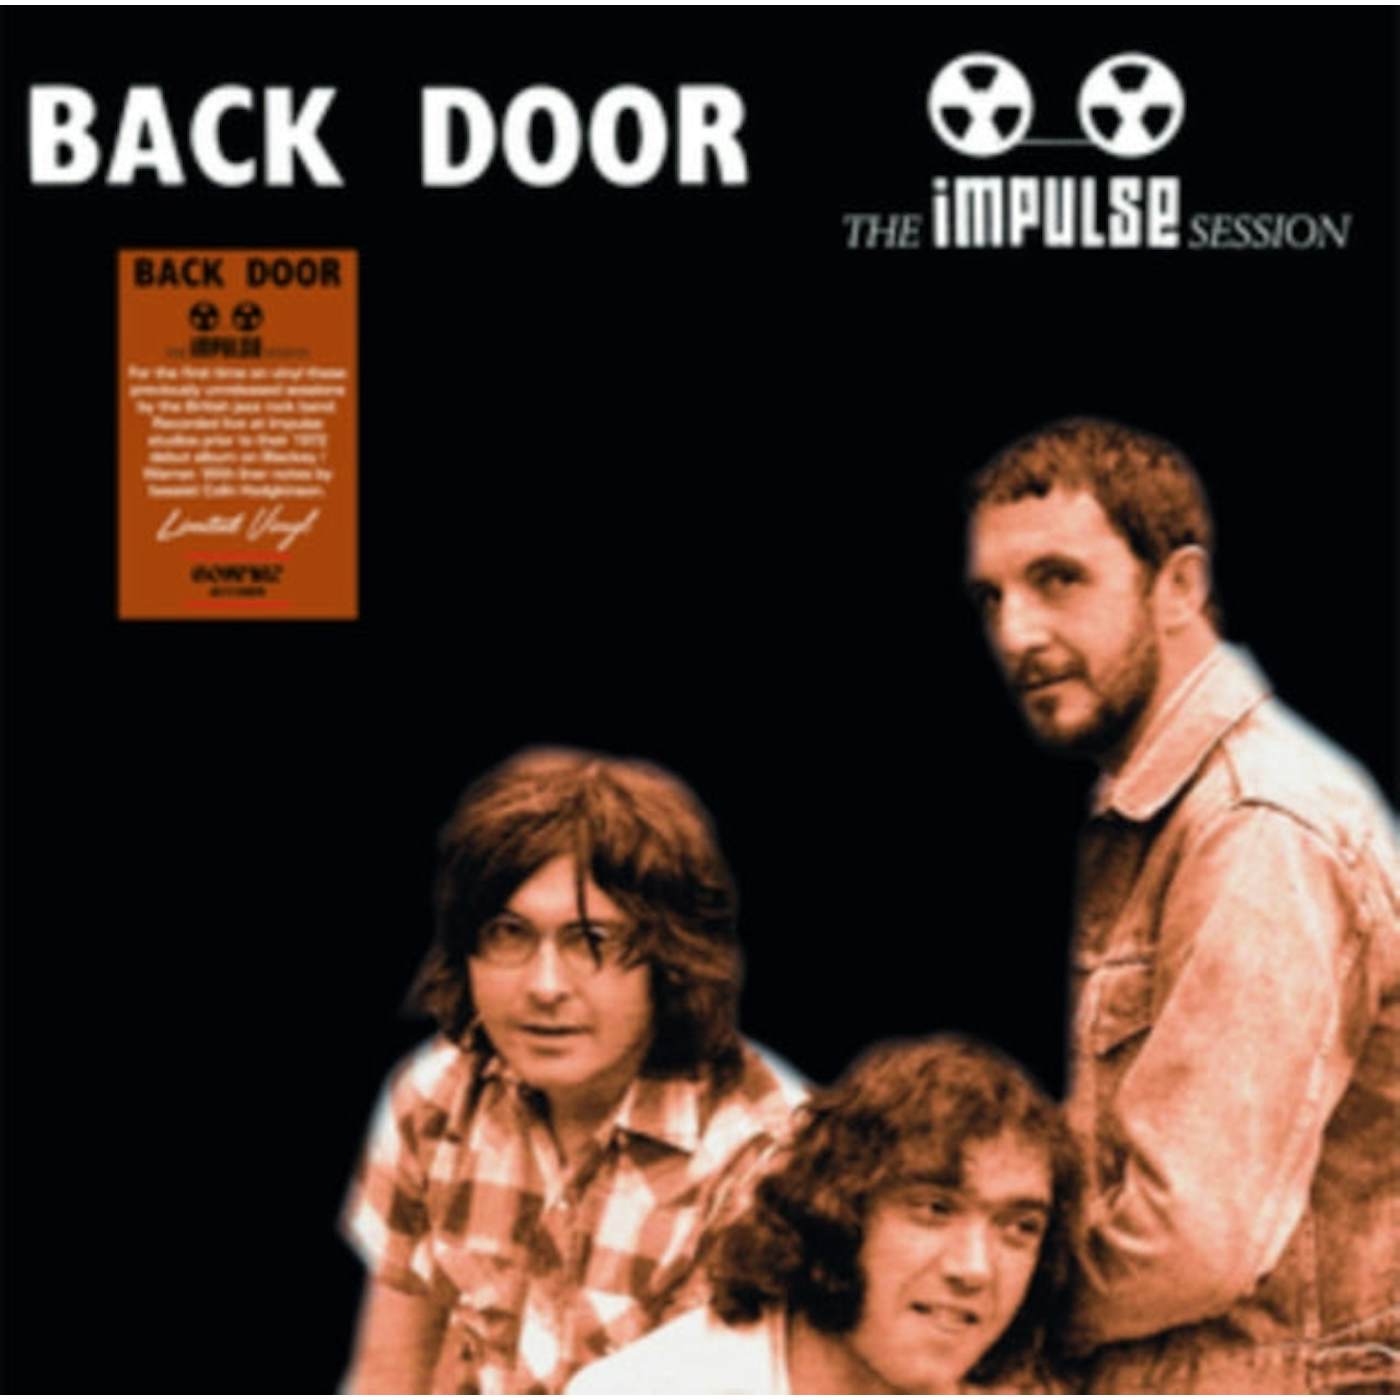  Back Door LP - The Impulse Session (Vinyl)